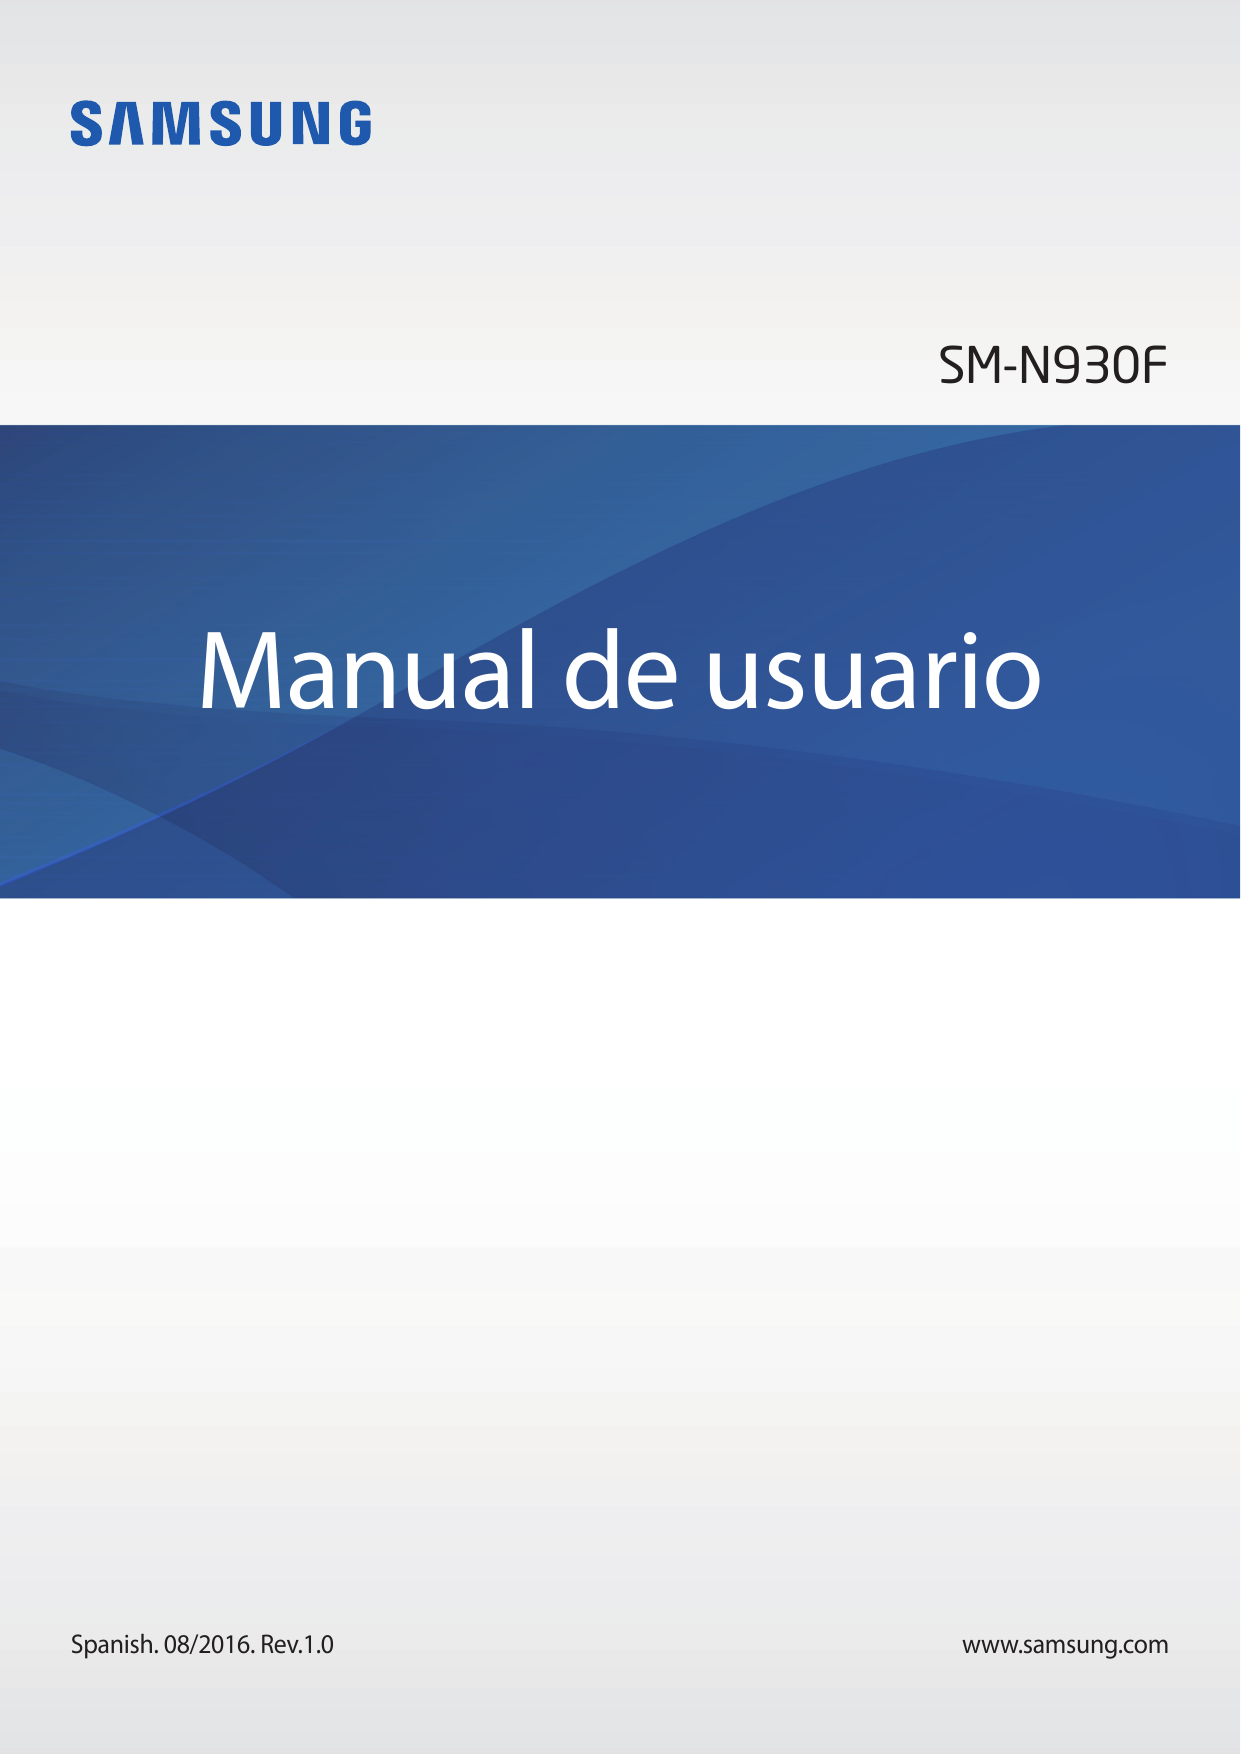 SM-N930FManual de usuarioSpanish. 08/2016. Rev.1.0www.samsung.com